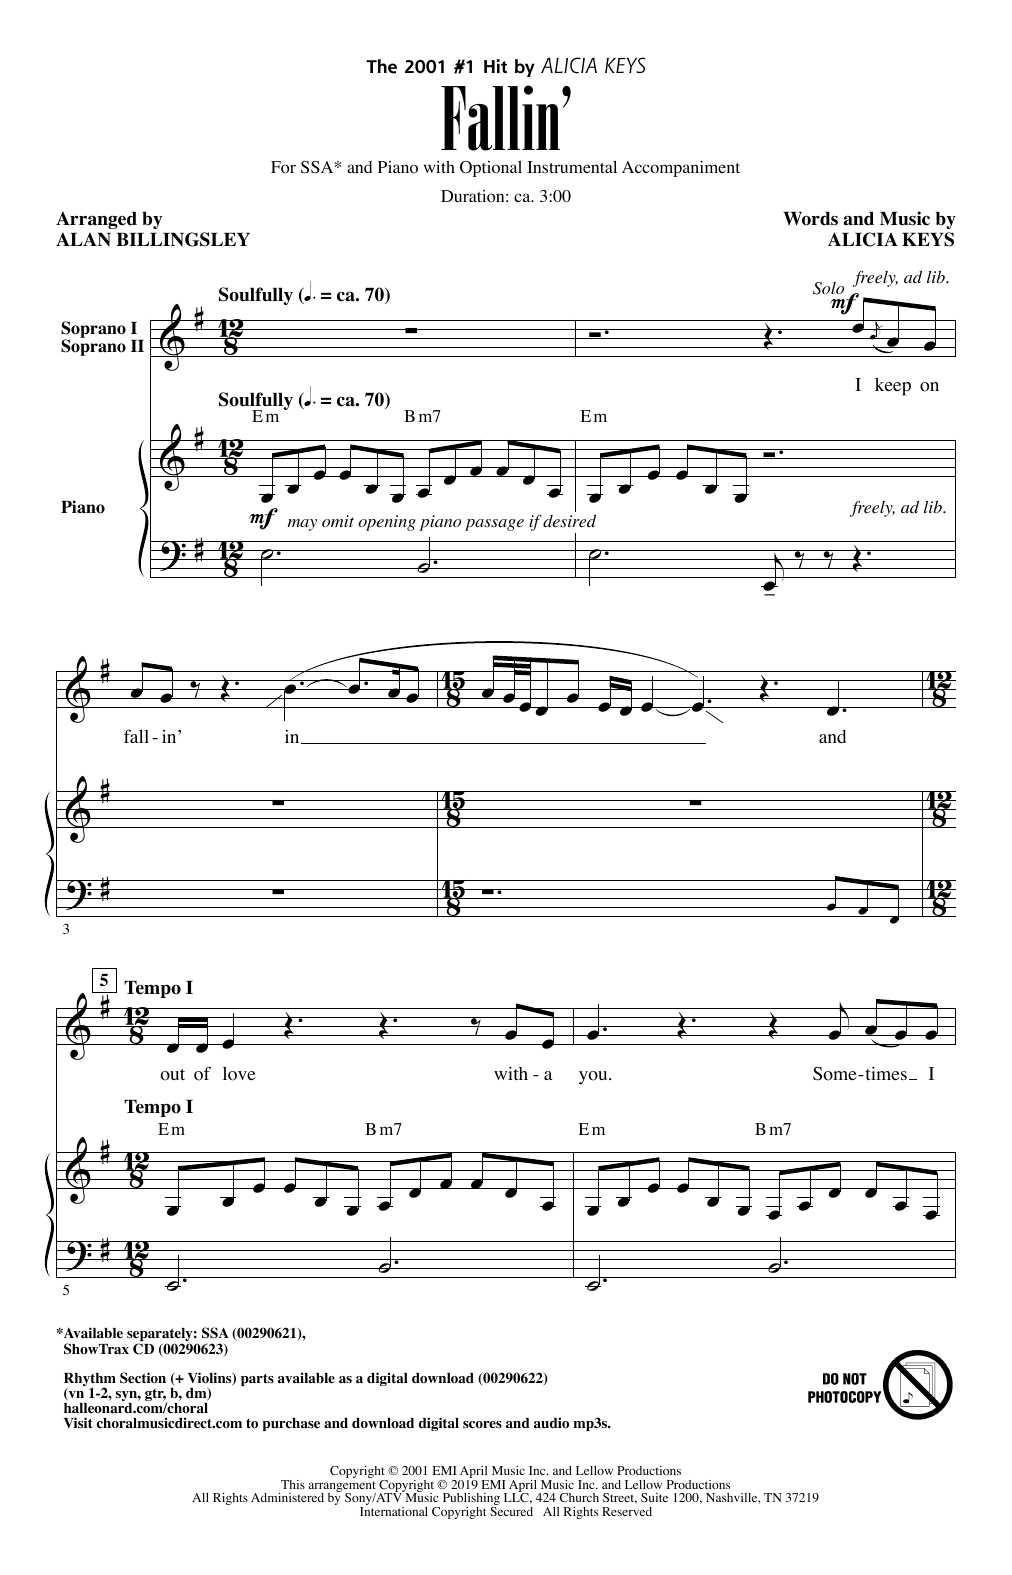 Alicia Keys Fallin' (arr. Alan Billingsley) Sheet Music Notes & Chords for SSA Choir - Download or Print PDF